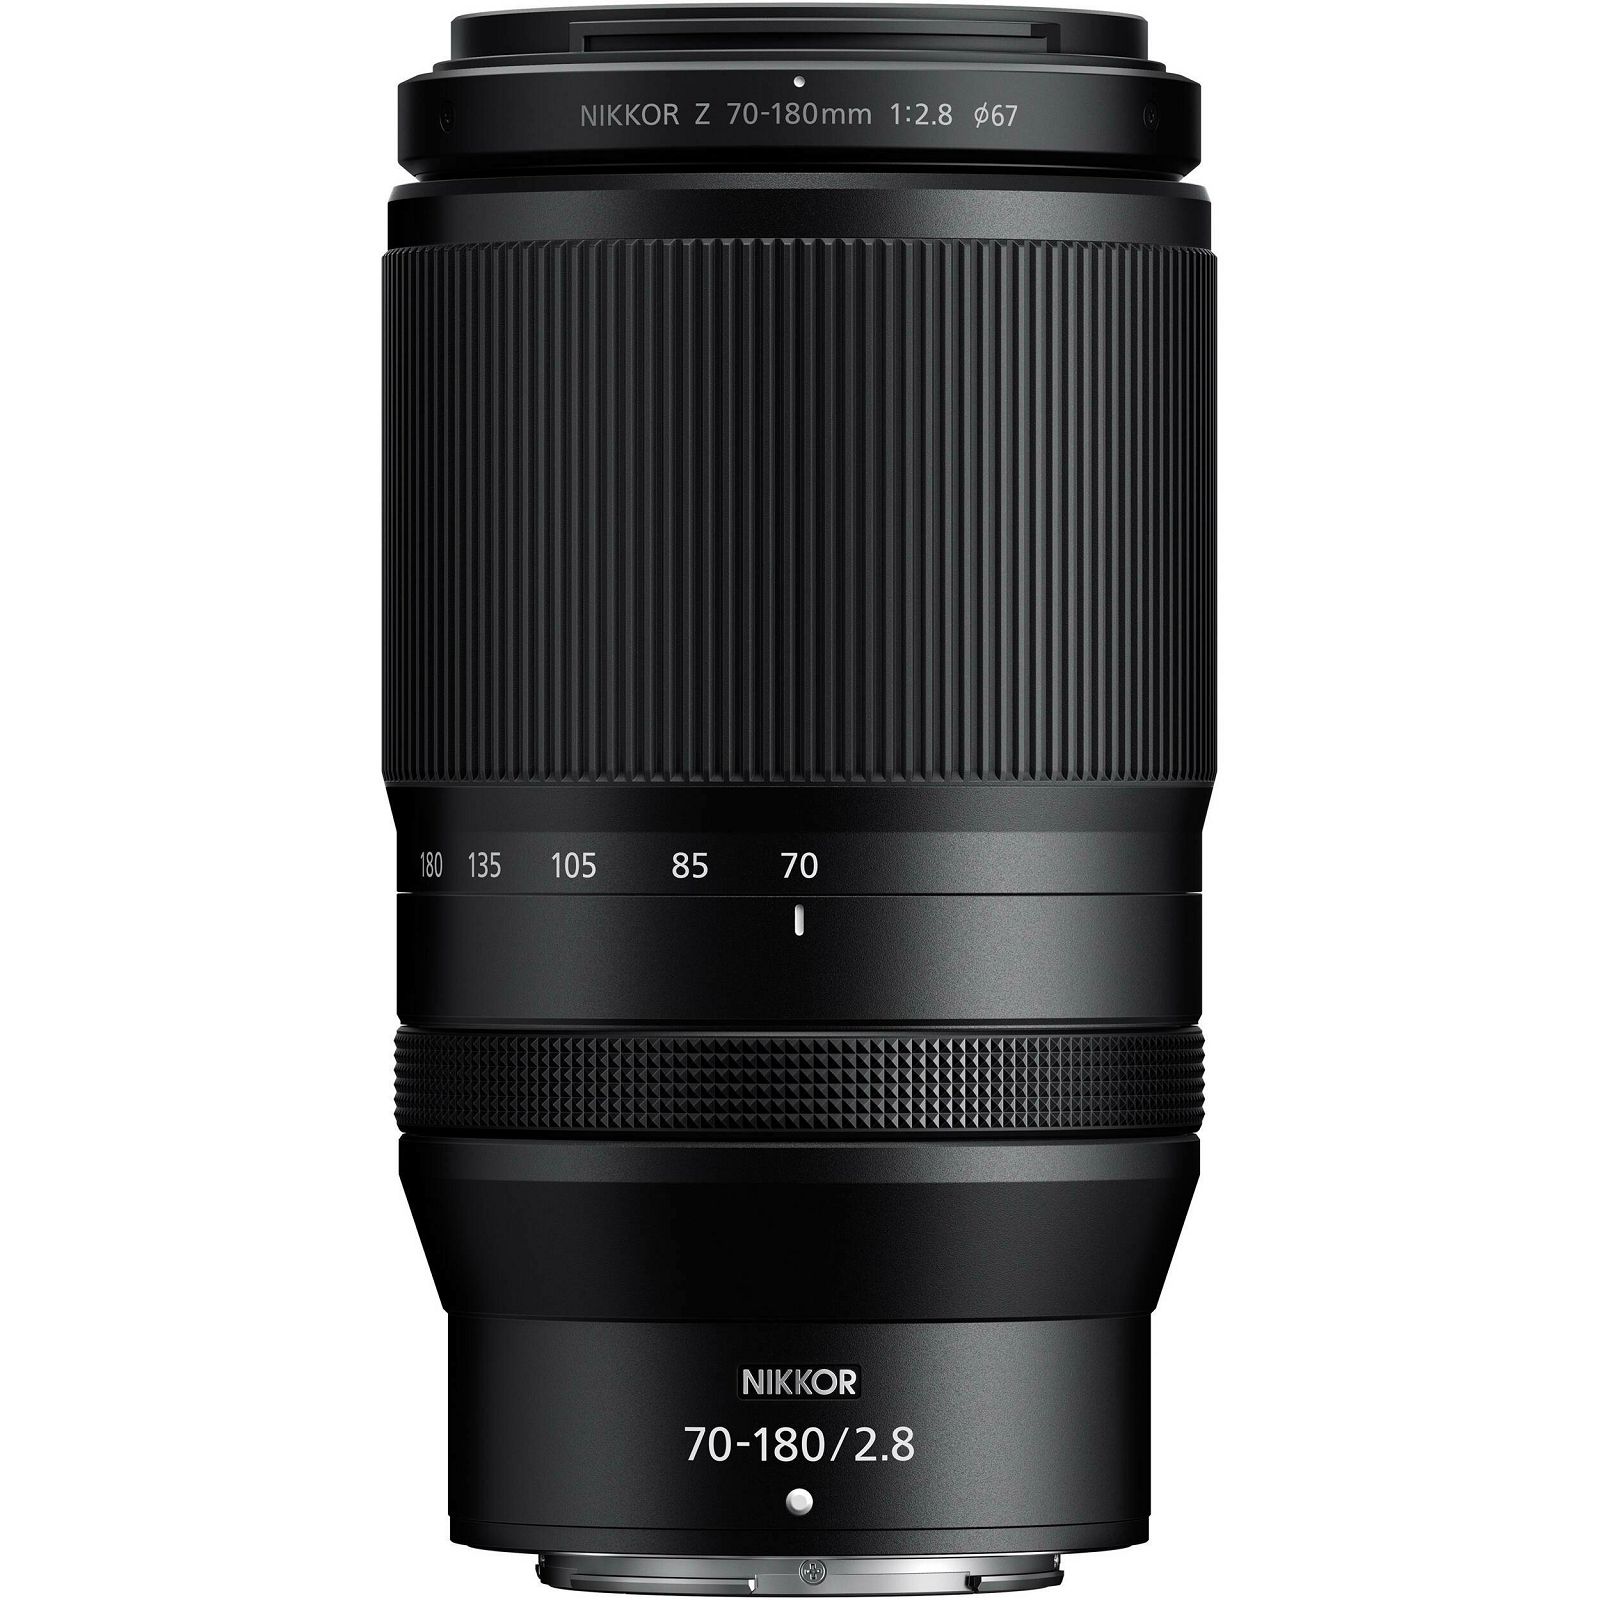 Nikon Z 70-180mm f/2.8 telefoto objektiv (JMA721DA)